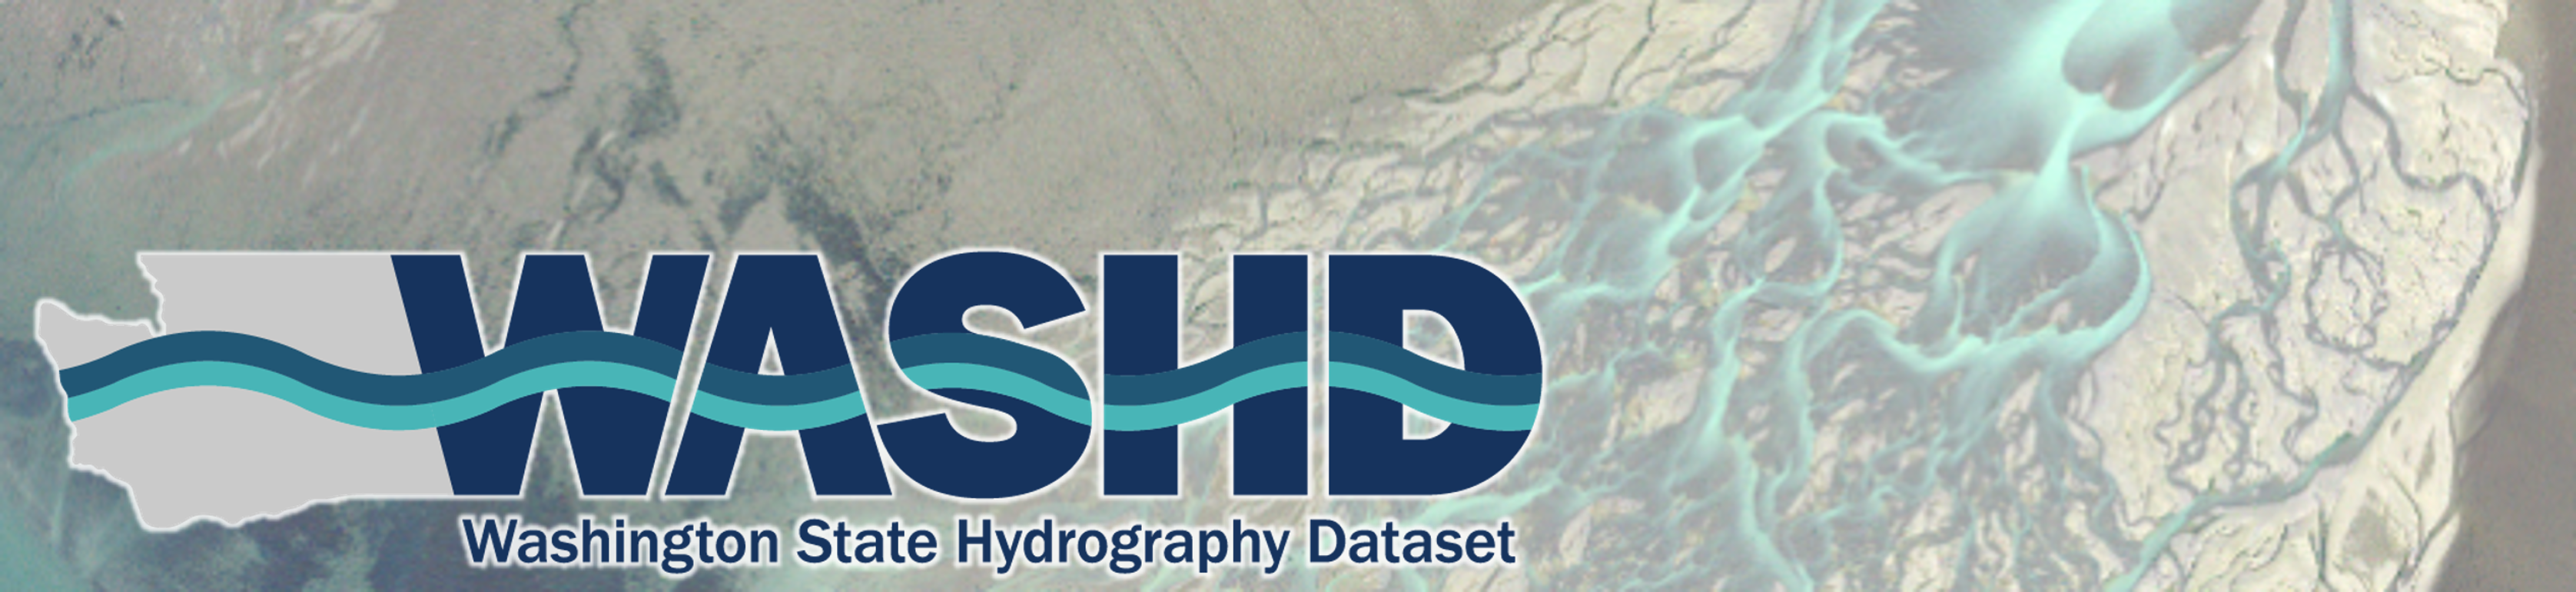 Washington State Hydrography Dataset logo